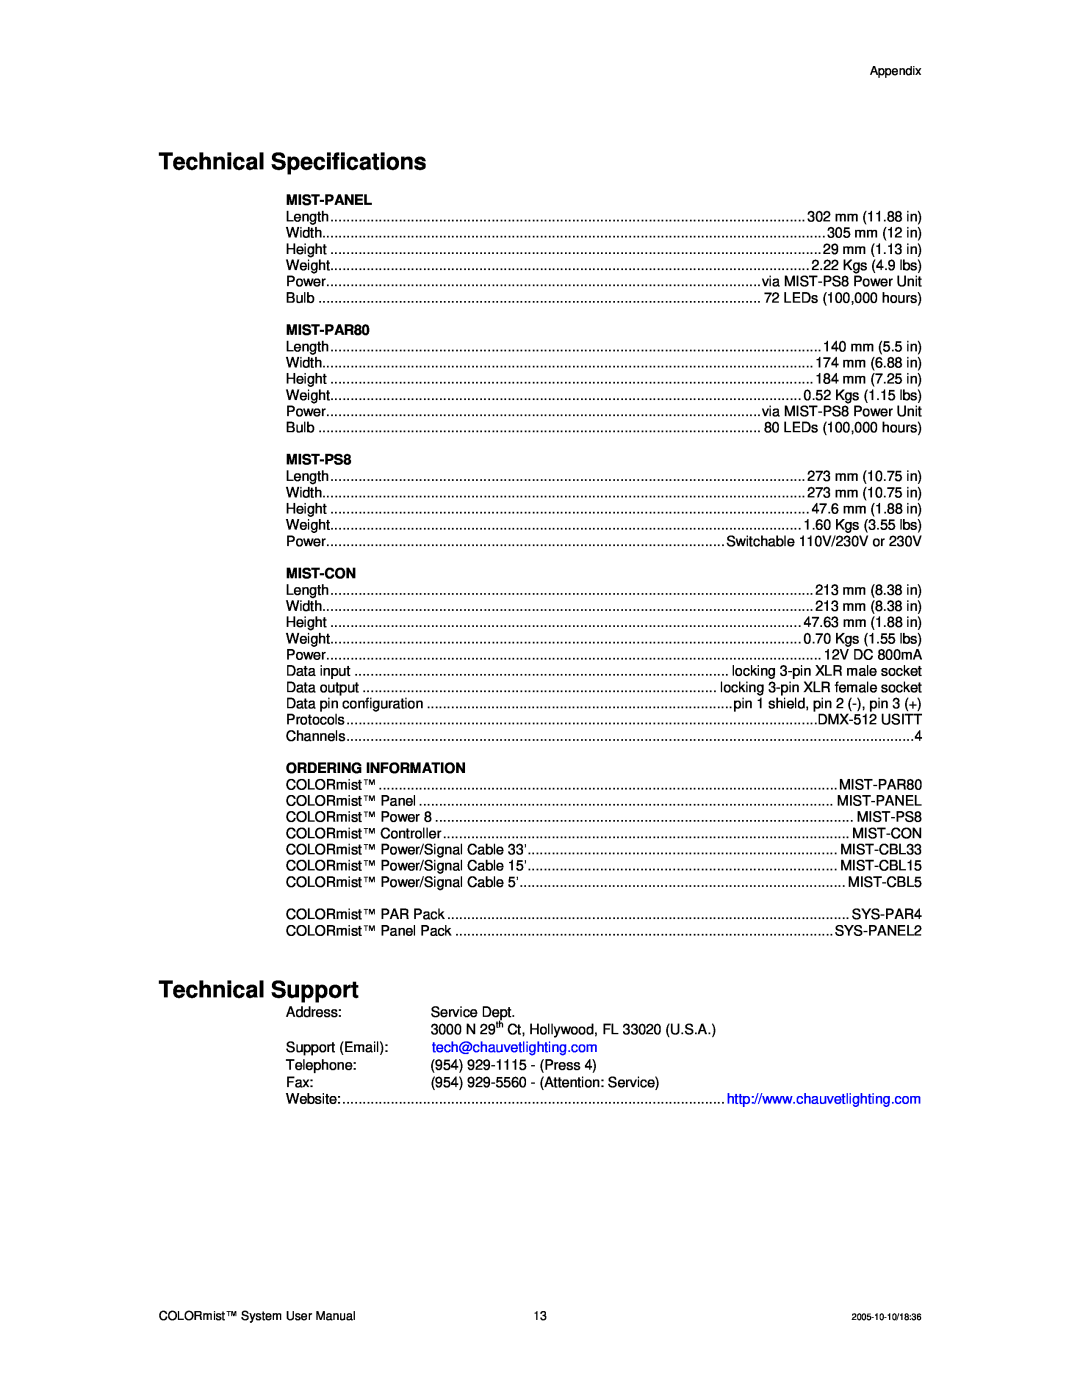 Chauvet MIST-PS8 Technical Specifications, Technical Support, Mist-Panel, MIST-PAR80, Mist-Con, Ordering Information 